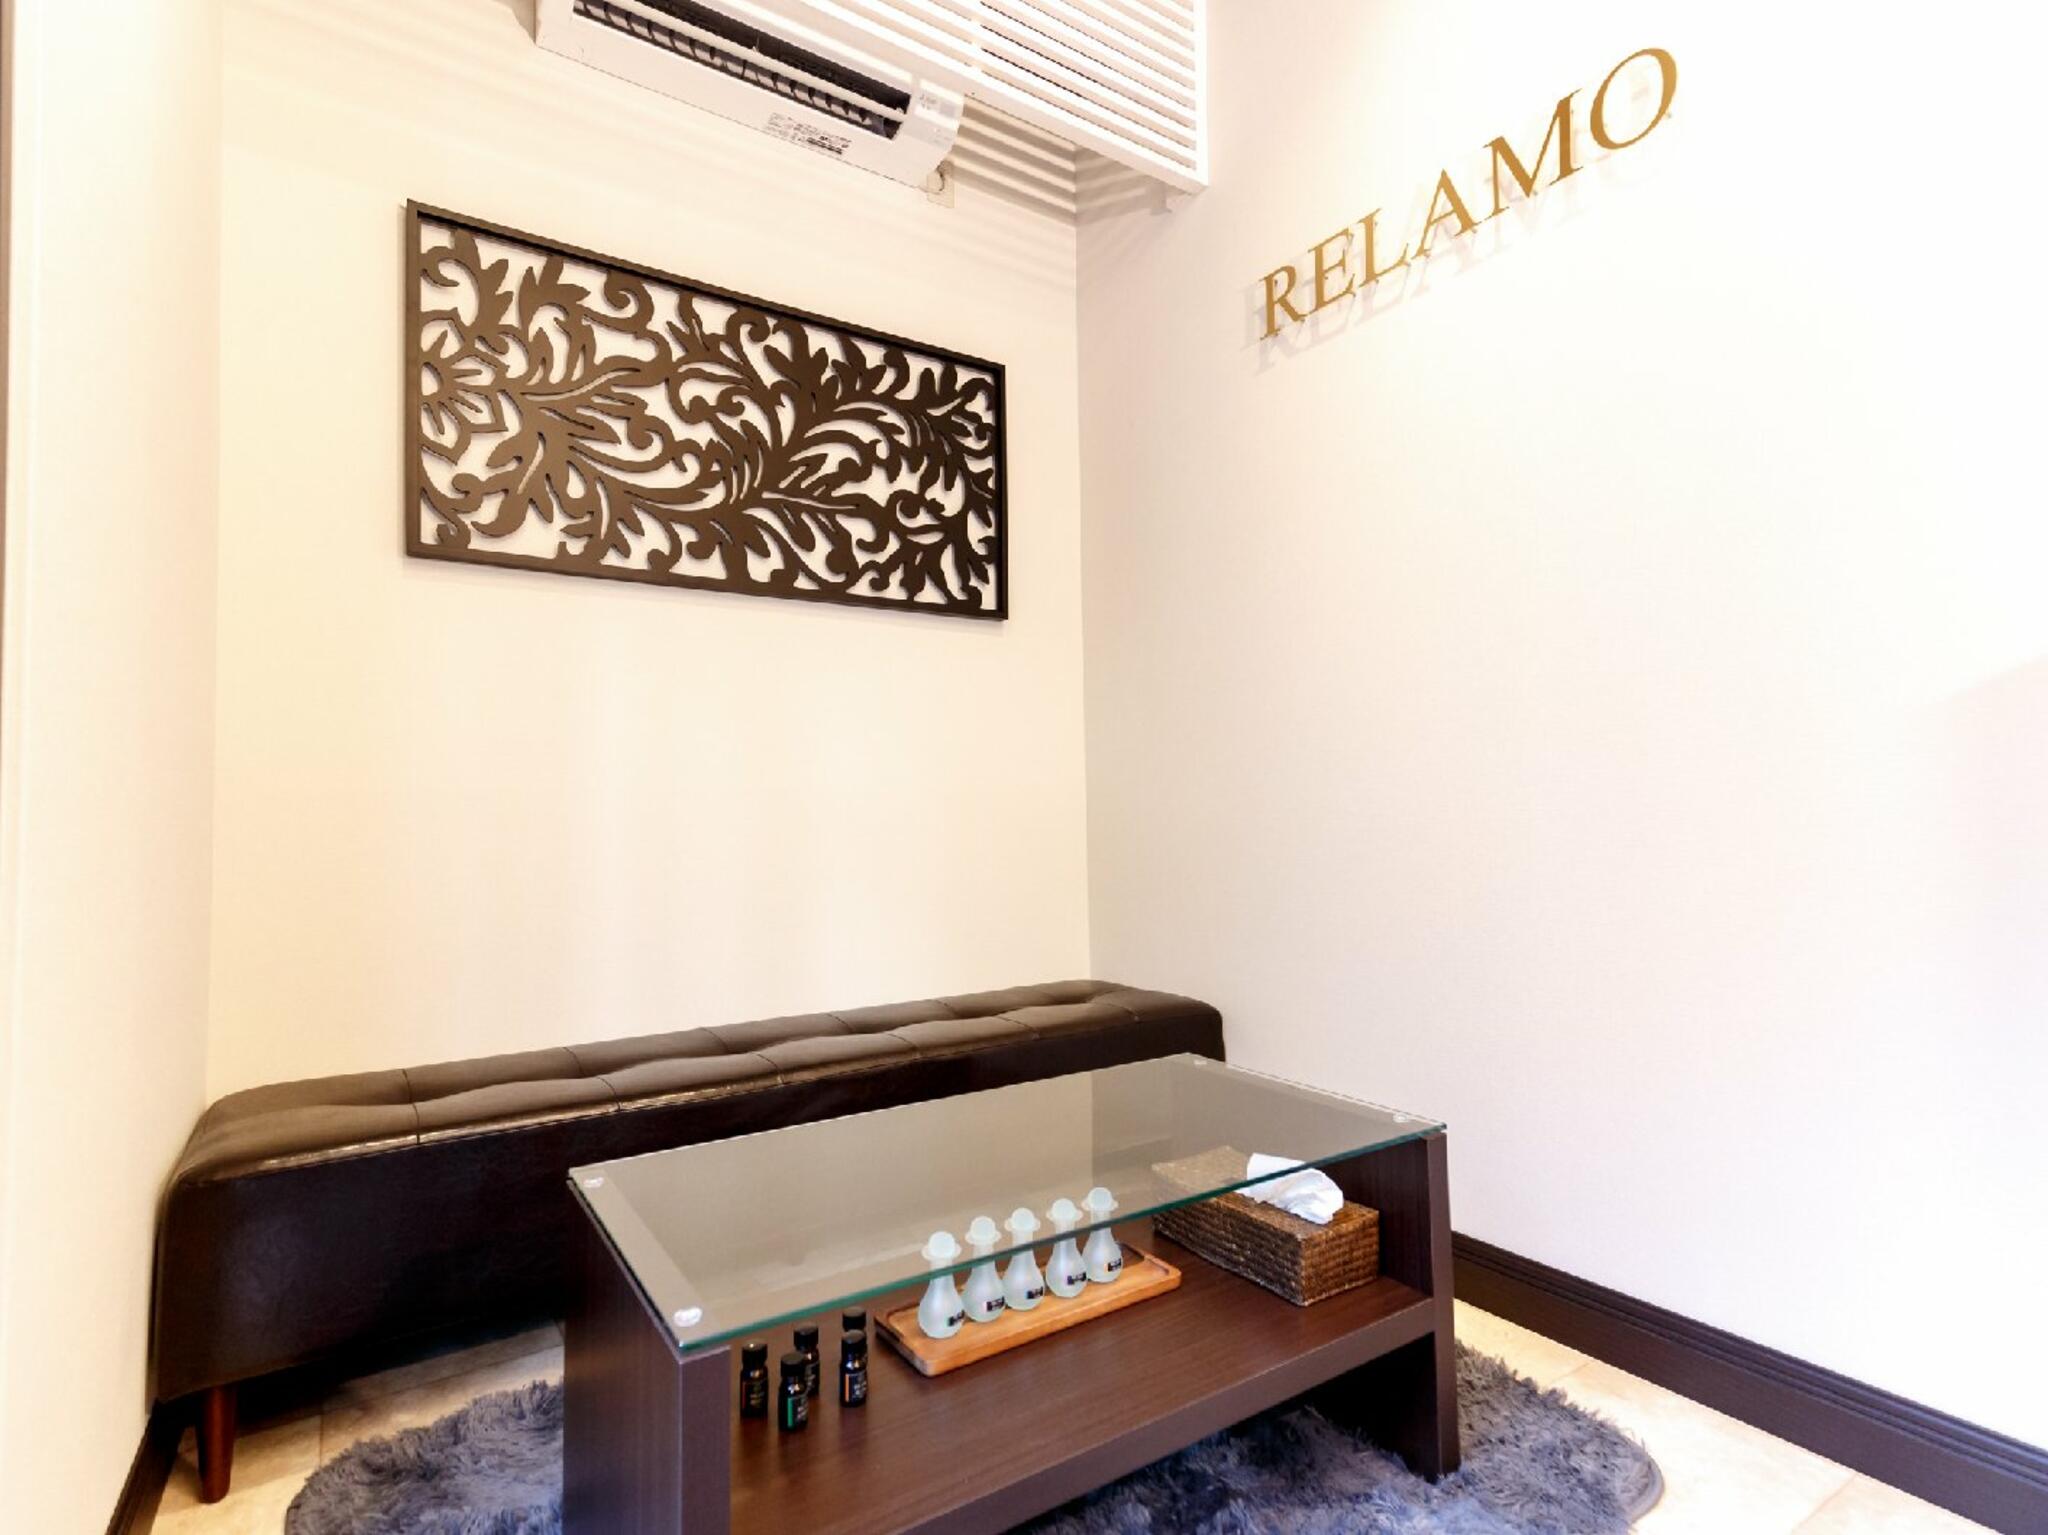 RELAMO(リラモ) 布施本店の代表写真1